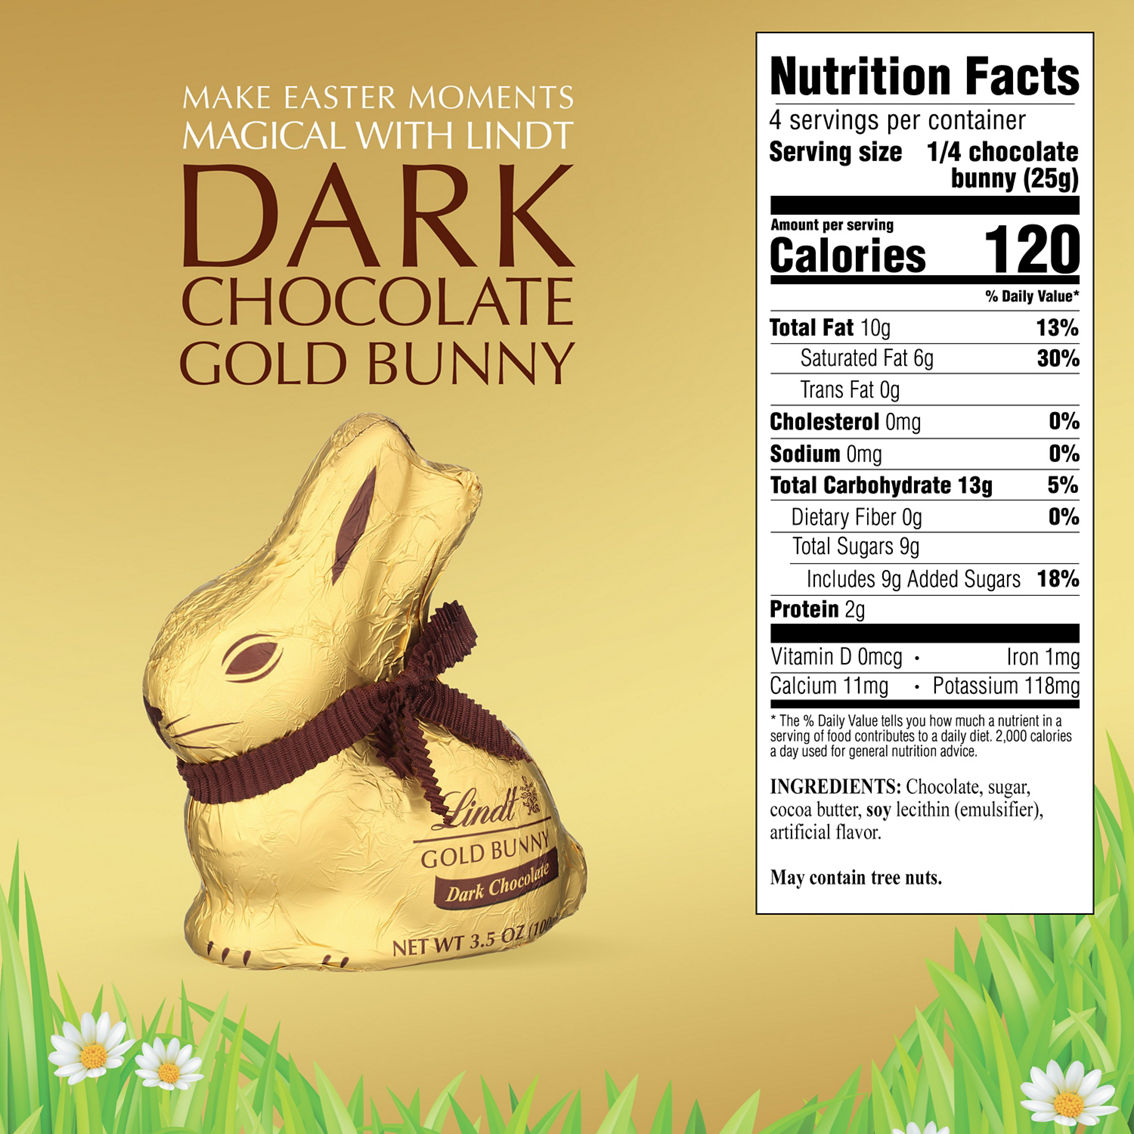 Lindt Gold Bunny Dark Chocolate 3.5 oz. - Image 2 of 2